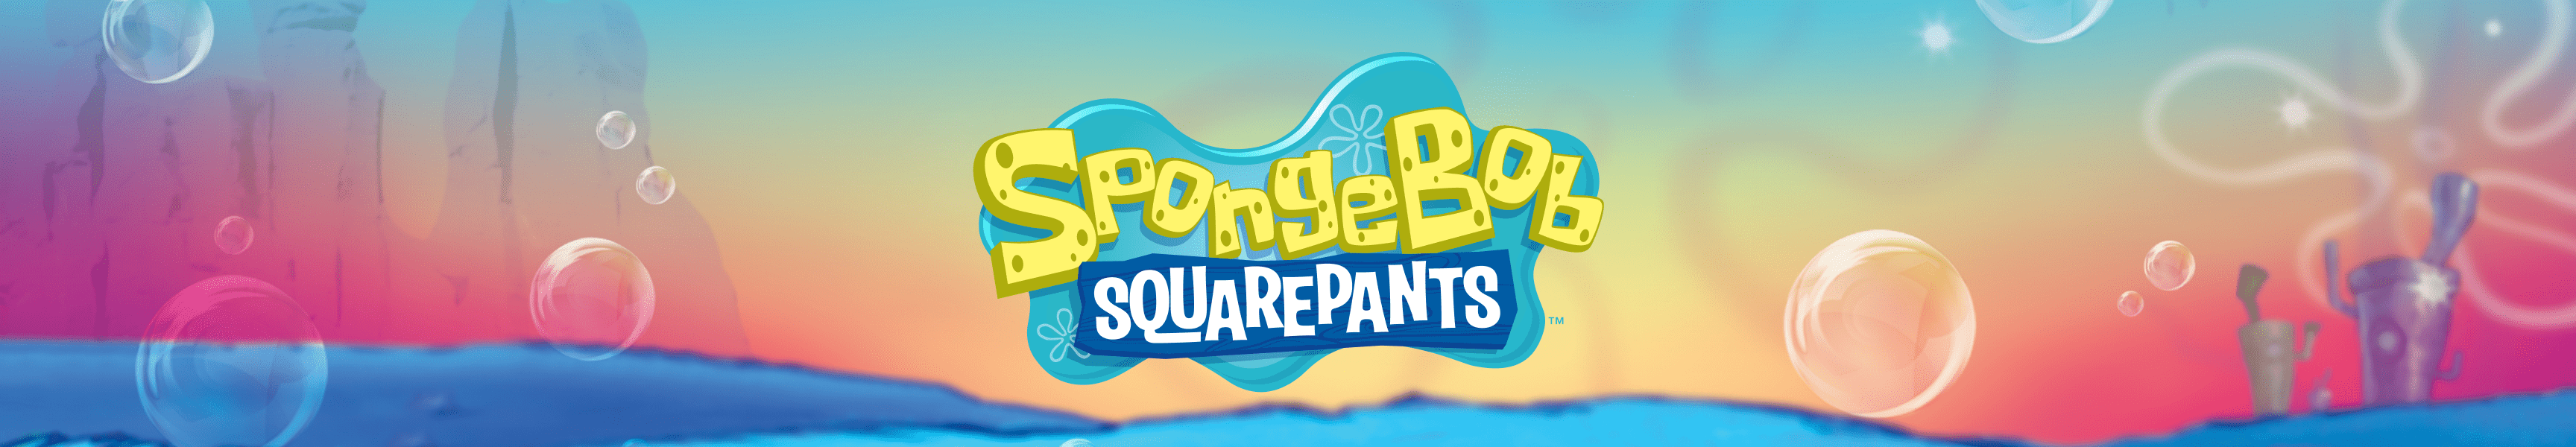 SpongeBob SquarePants Exclusive